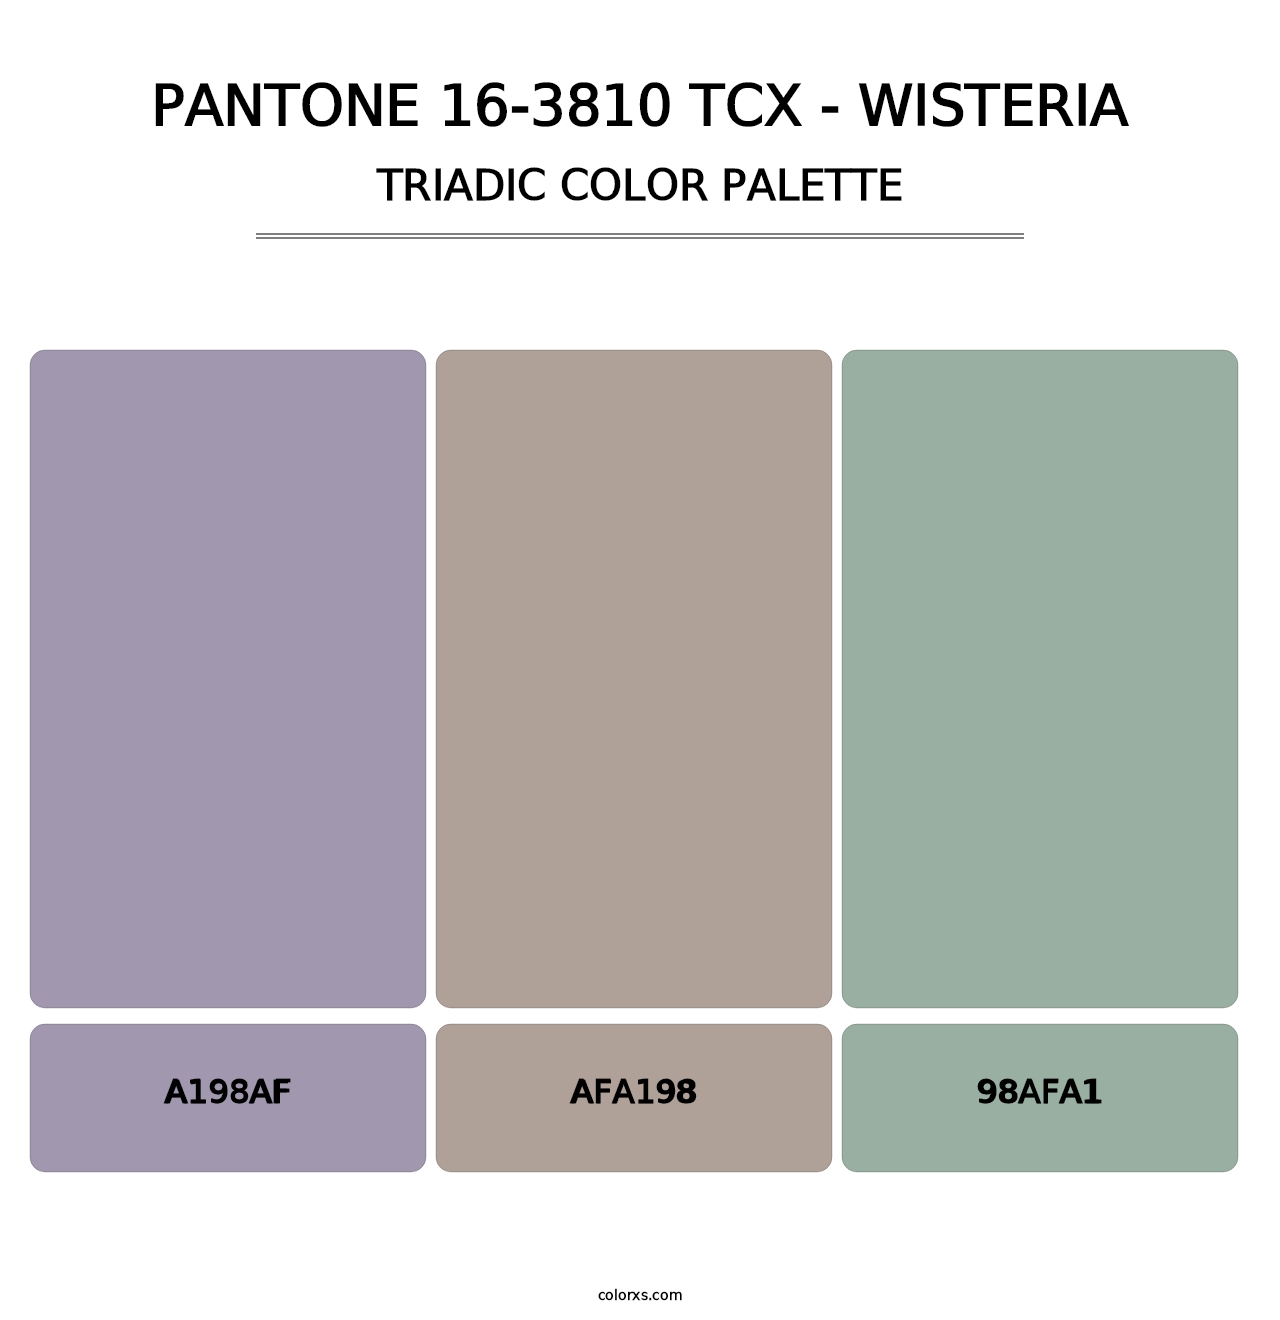 PANTONE 16-3810 TCX - Wisteria - Triadic Color Palette